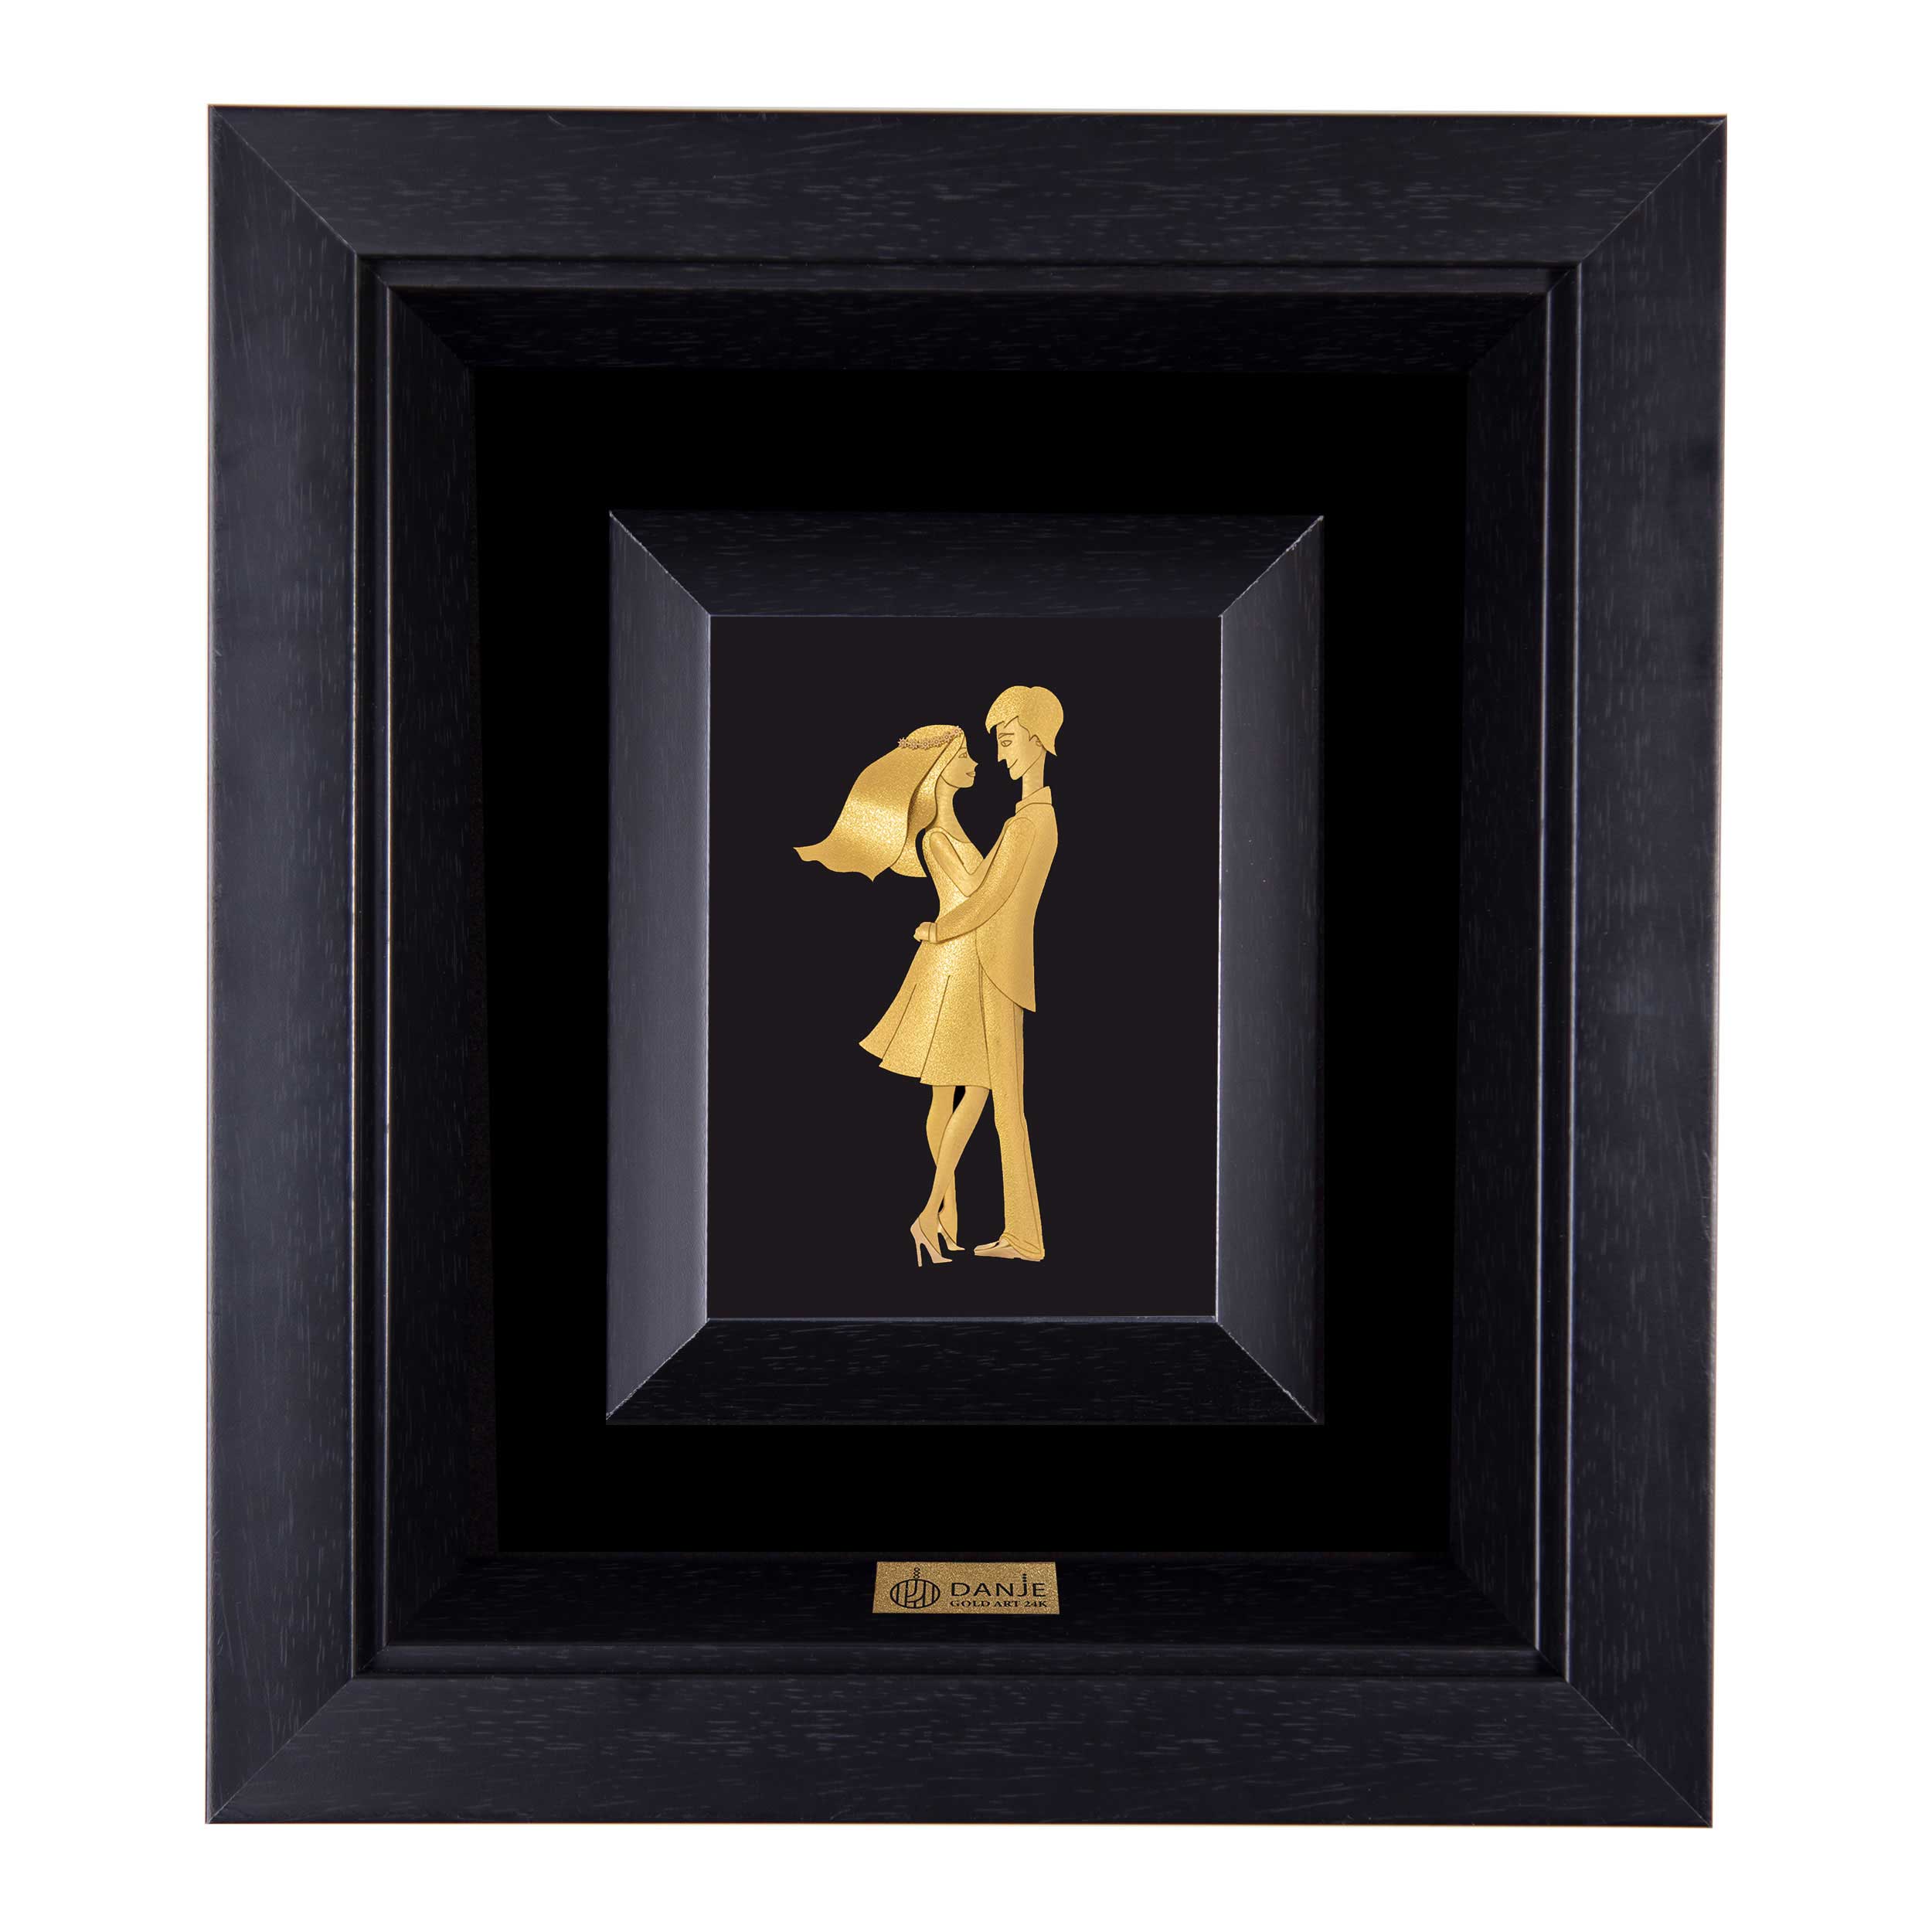 24 carat gold leaf panel with PVC frame, girl and boy design, Danjeh brand